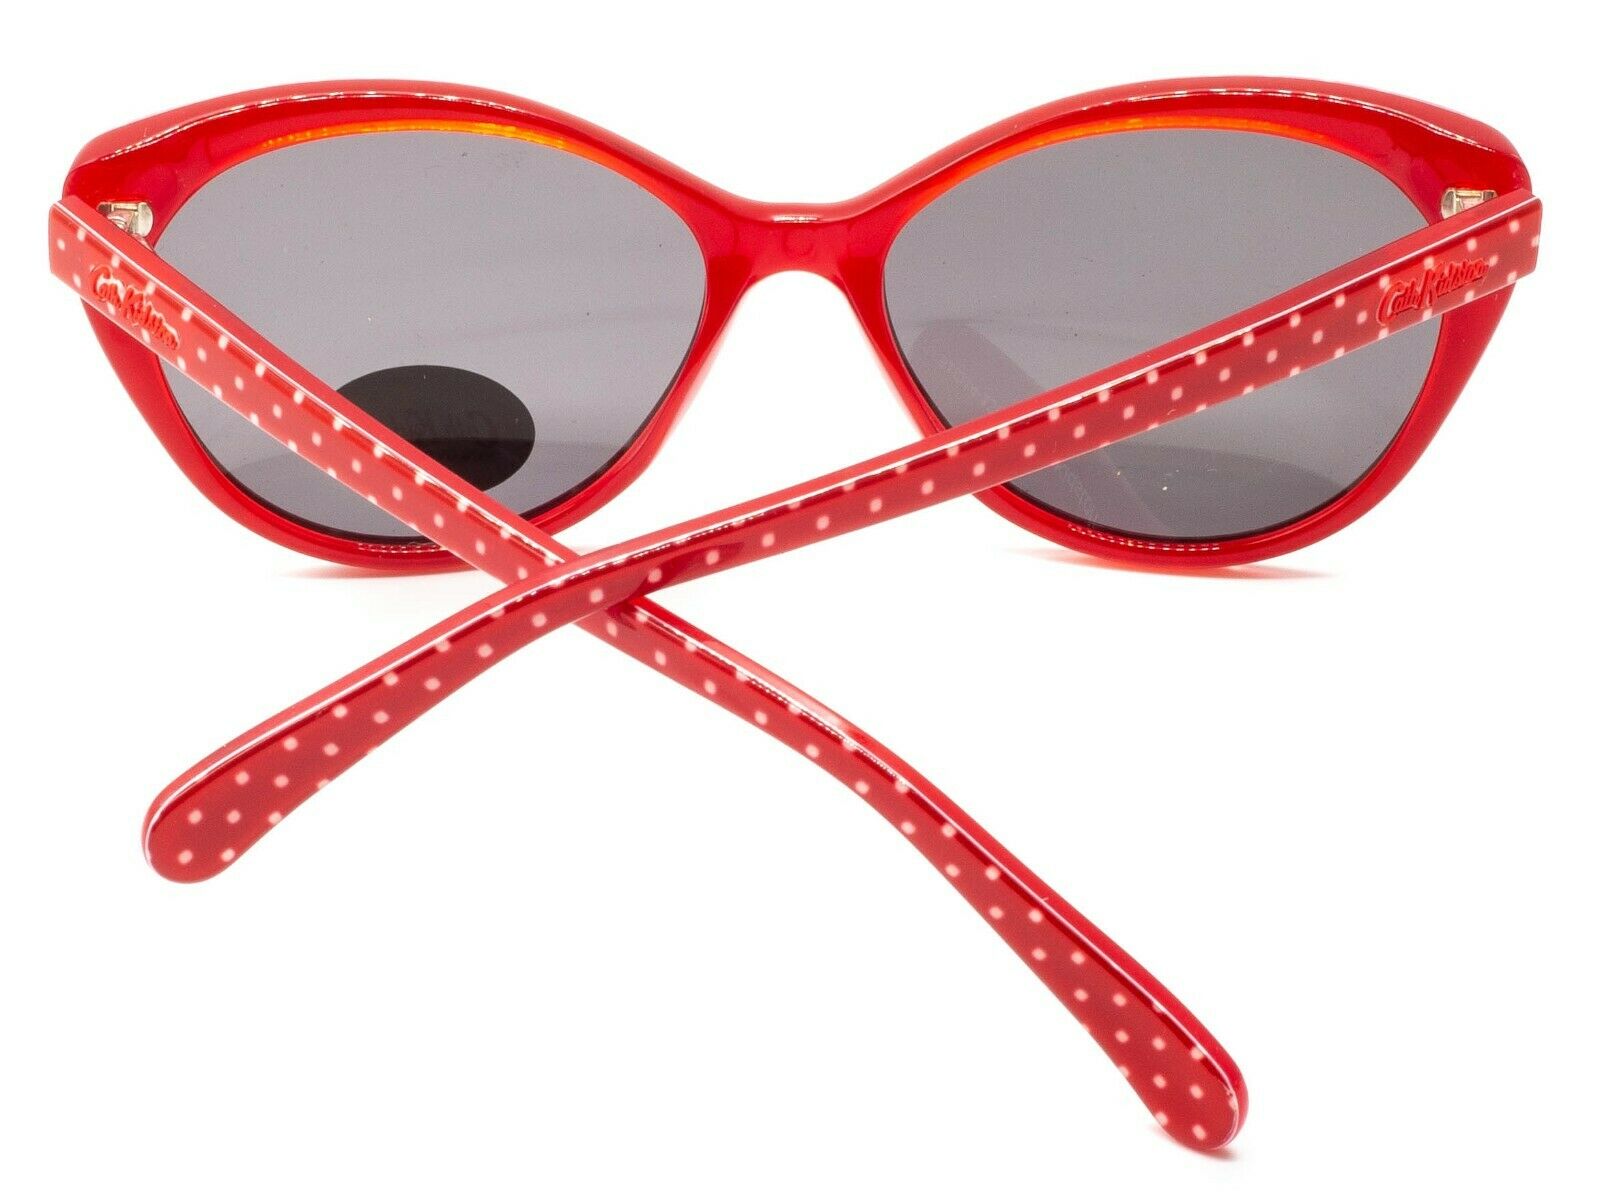 Cath Kidston Teen Sun 03 30475052 51mm FRAMES Sunlasses Shades Eyewear - New